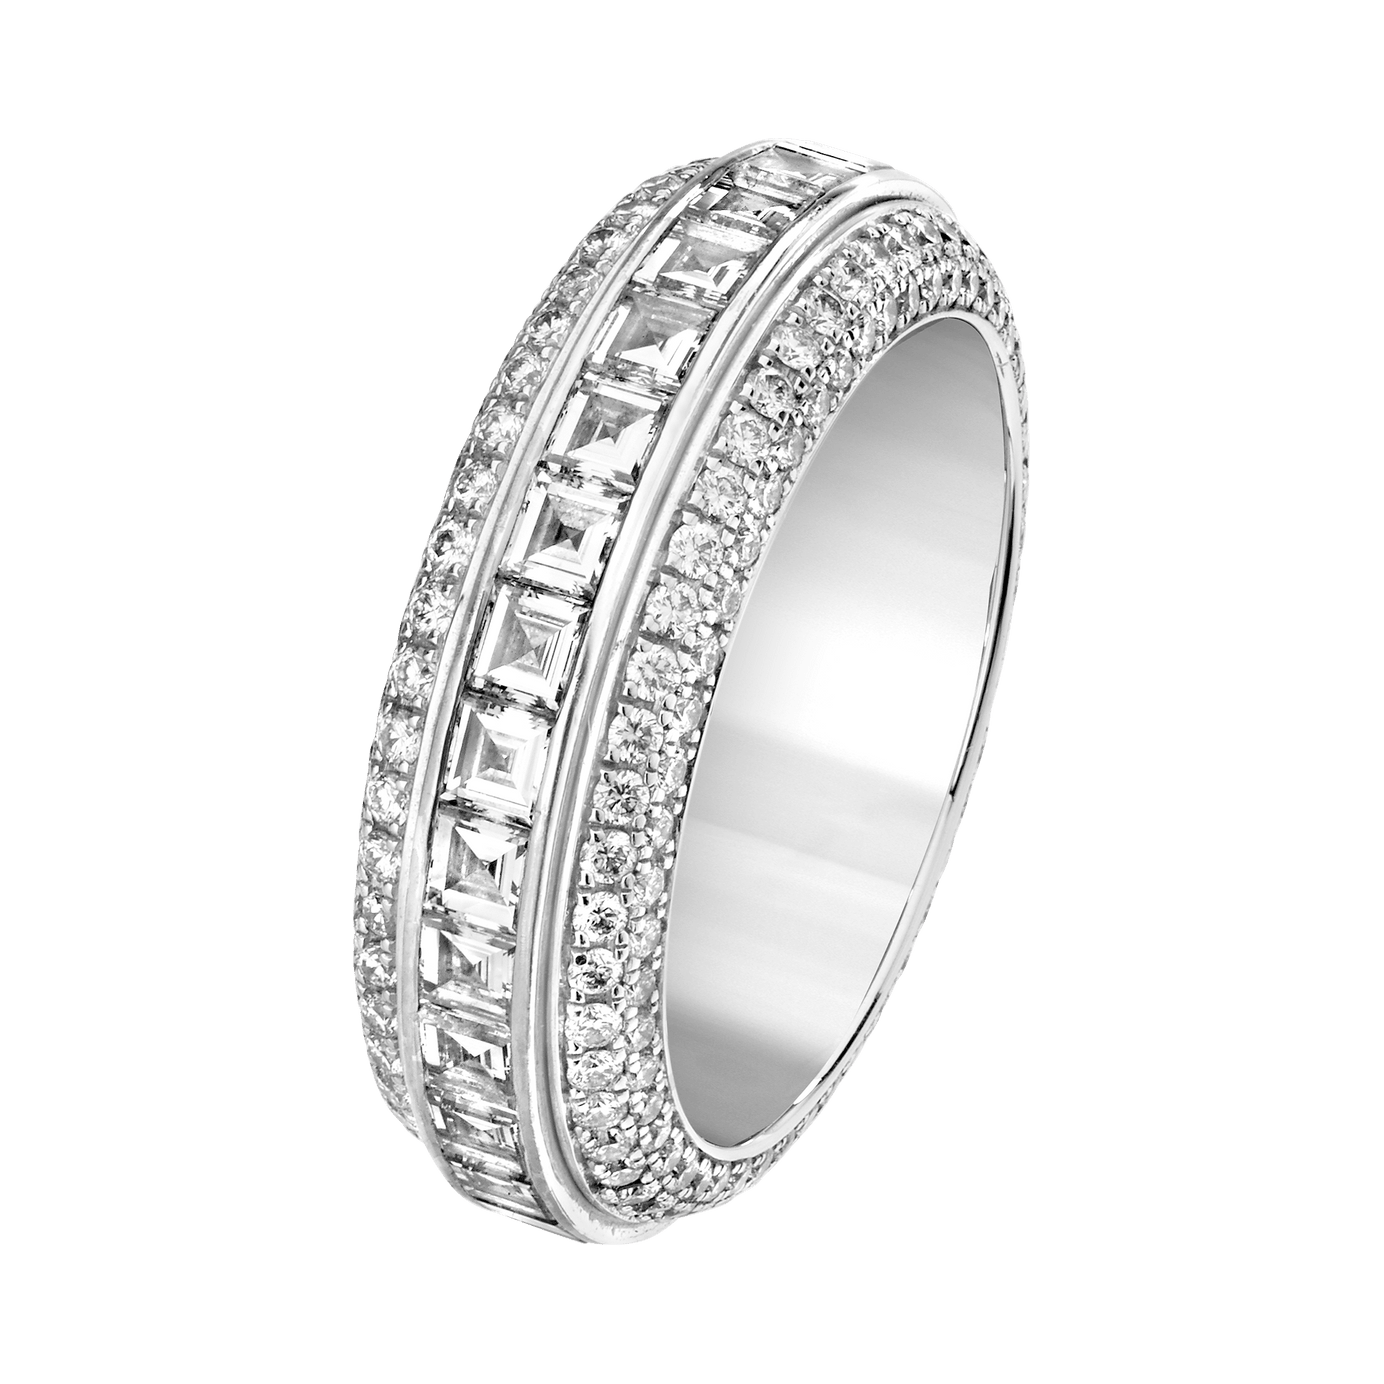 Vivienda capoc Polinizar White Gold Diamond Wedding Ring G34A7400 - Piaget Wedding Jewelry Online